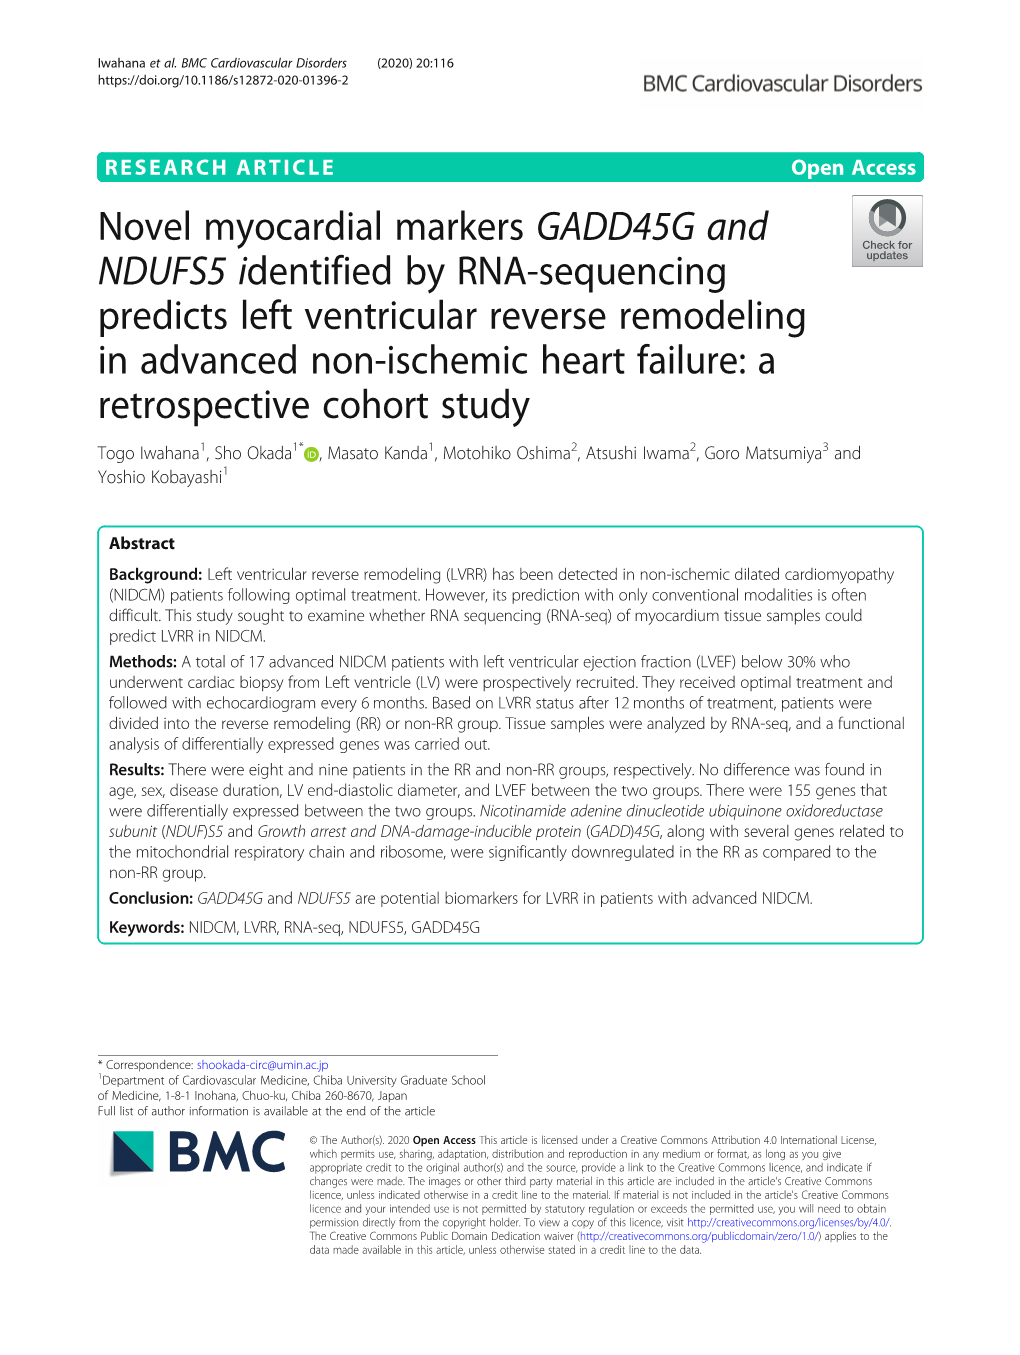 Novel Myocardial Markers GADD45G and NDUFS5 Identified by RNA